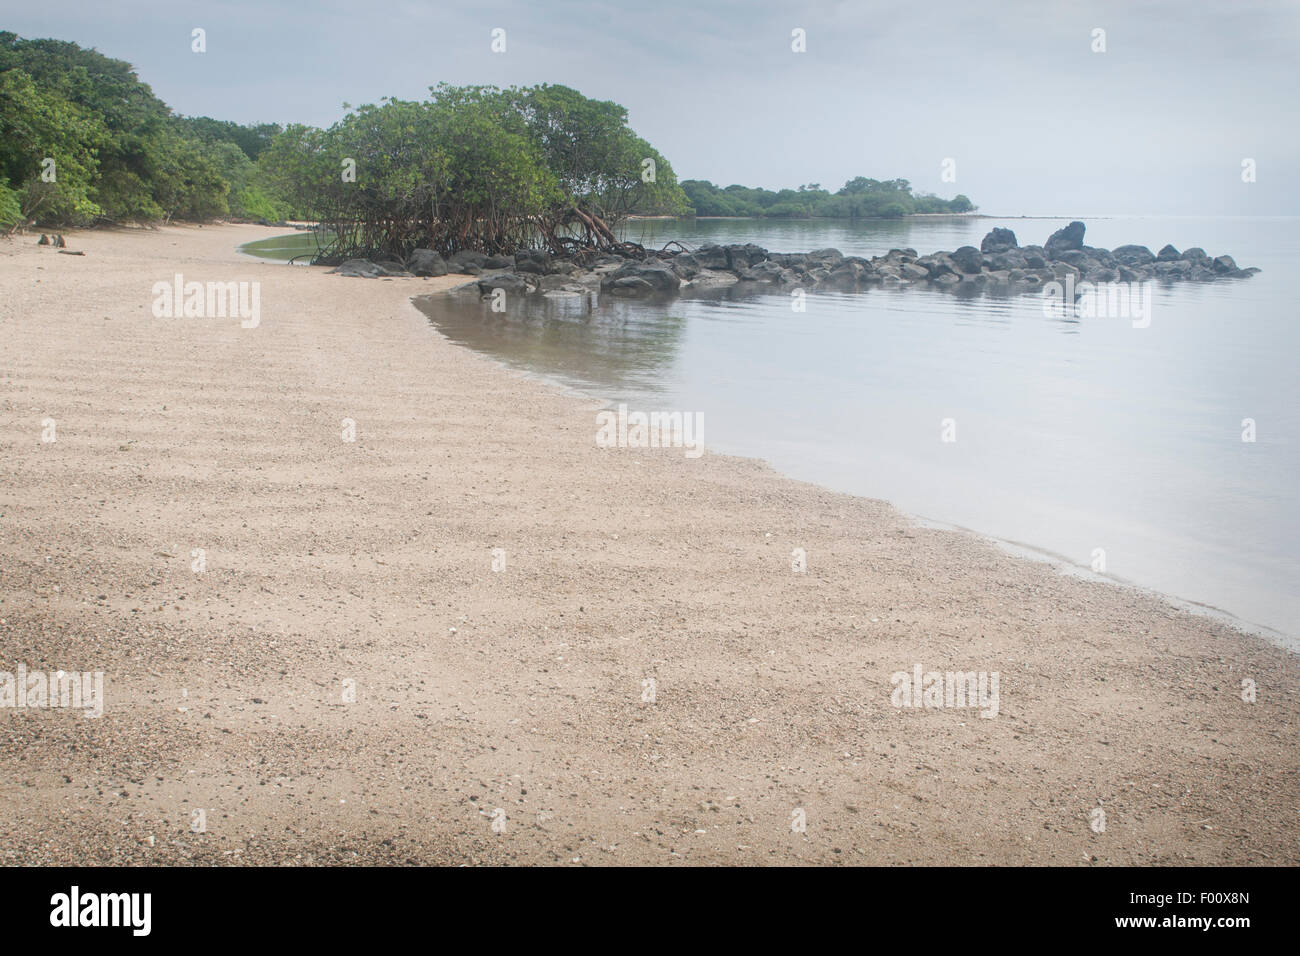 Mangrove trees on the beach; Baluran National Park, Java, Indonesia. Stock Photo